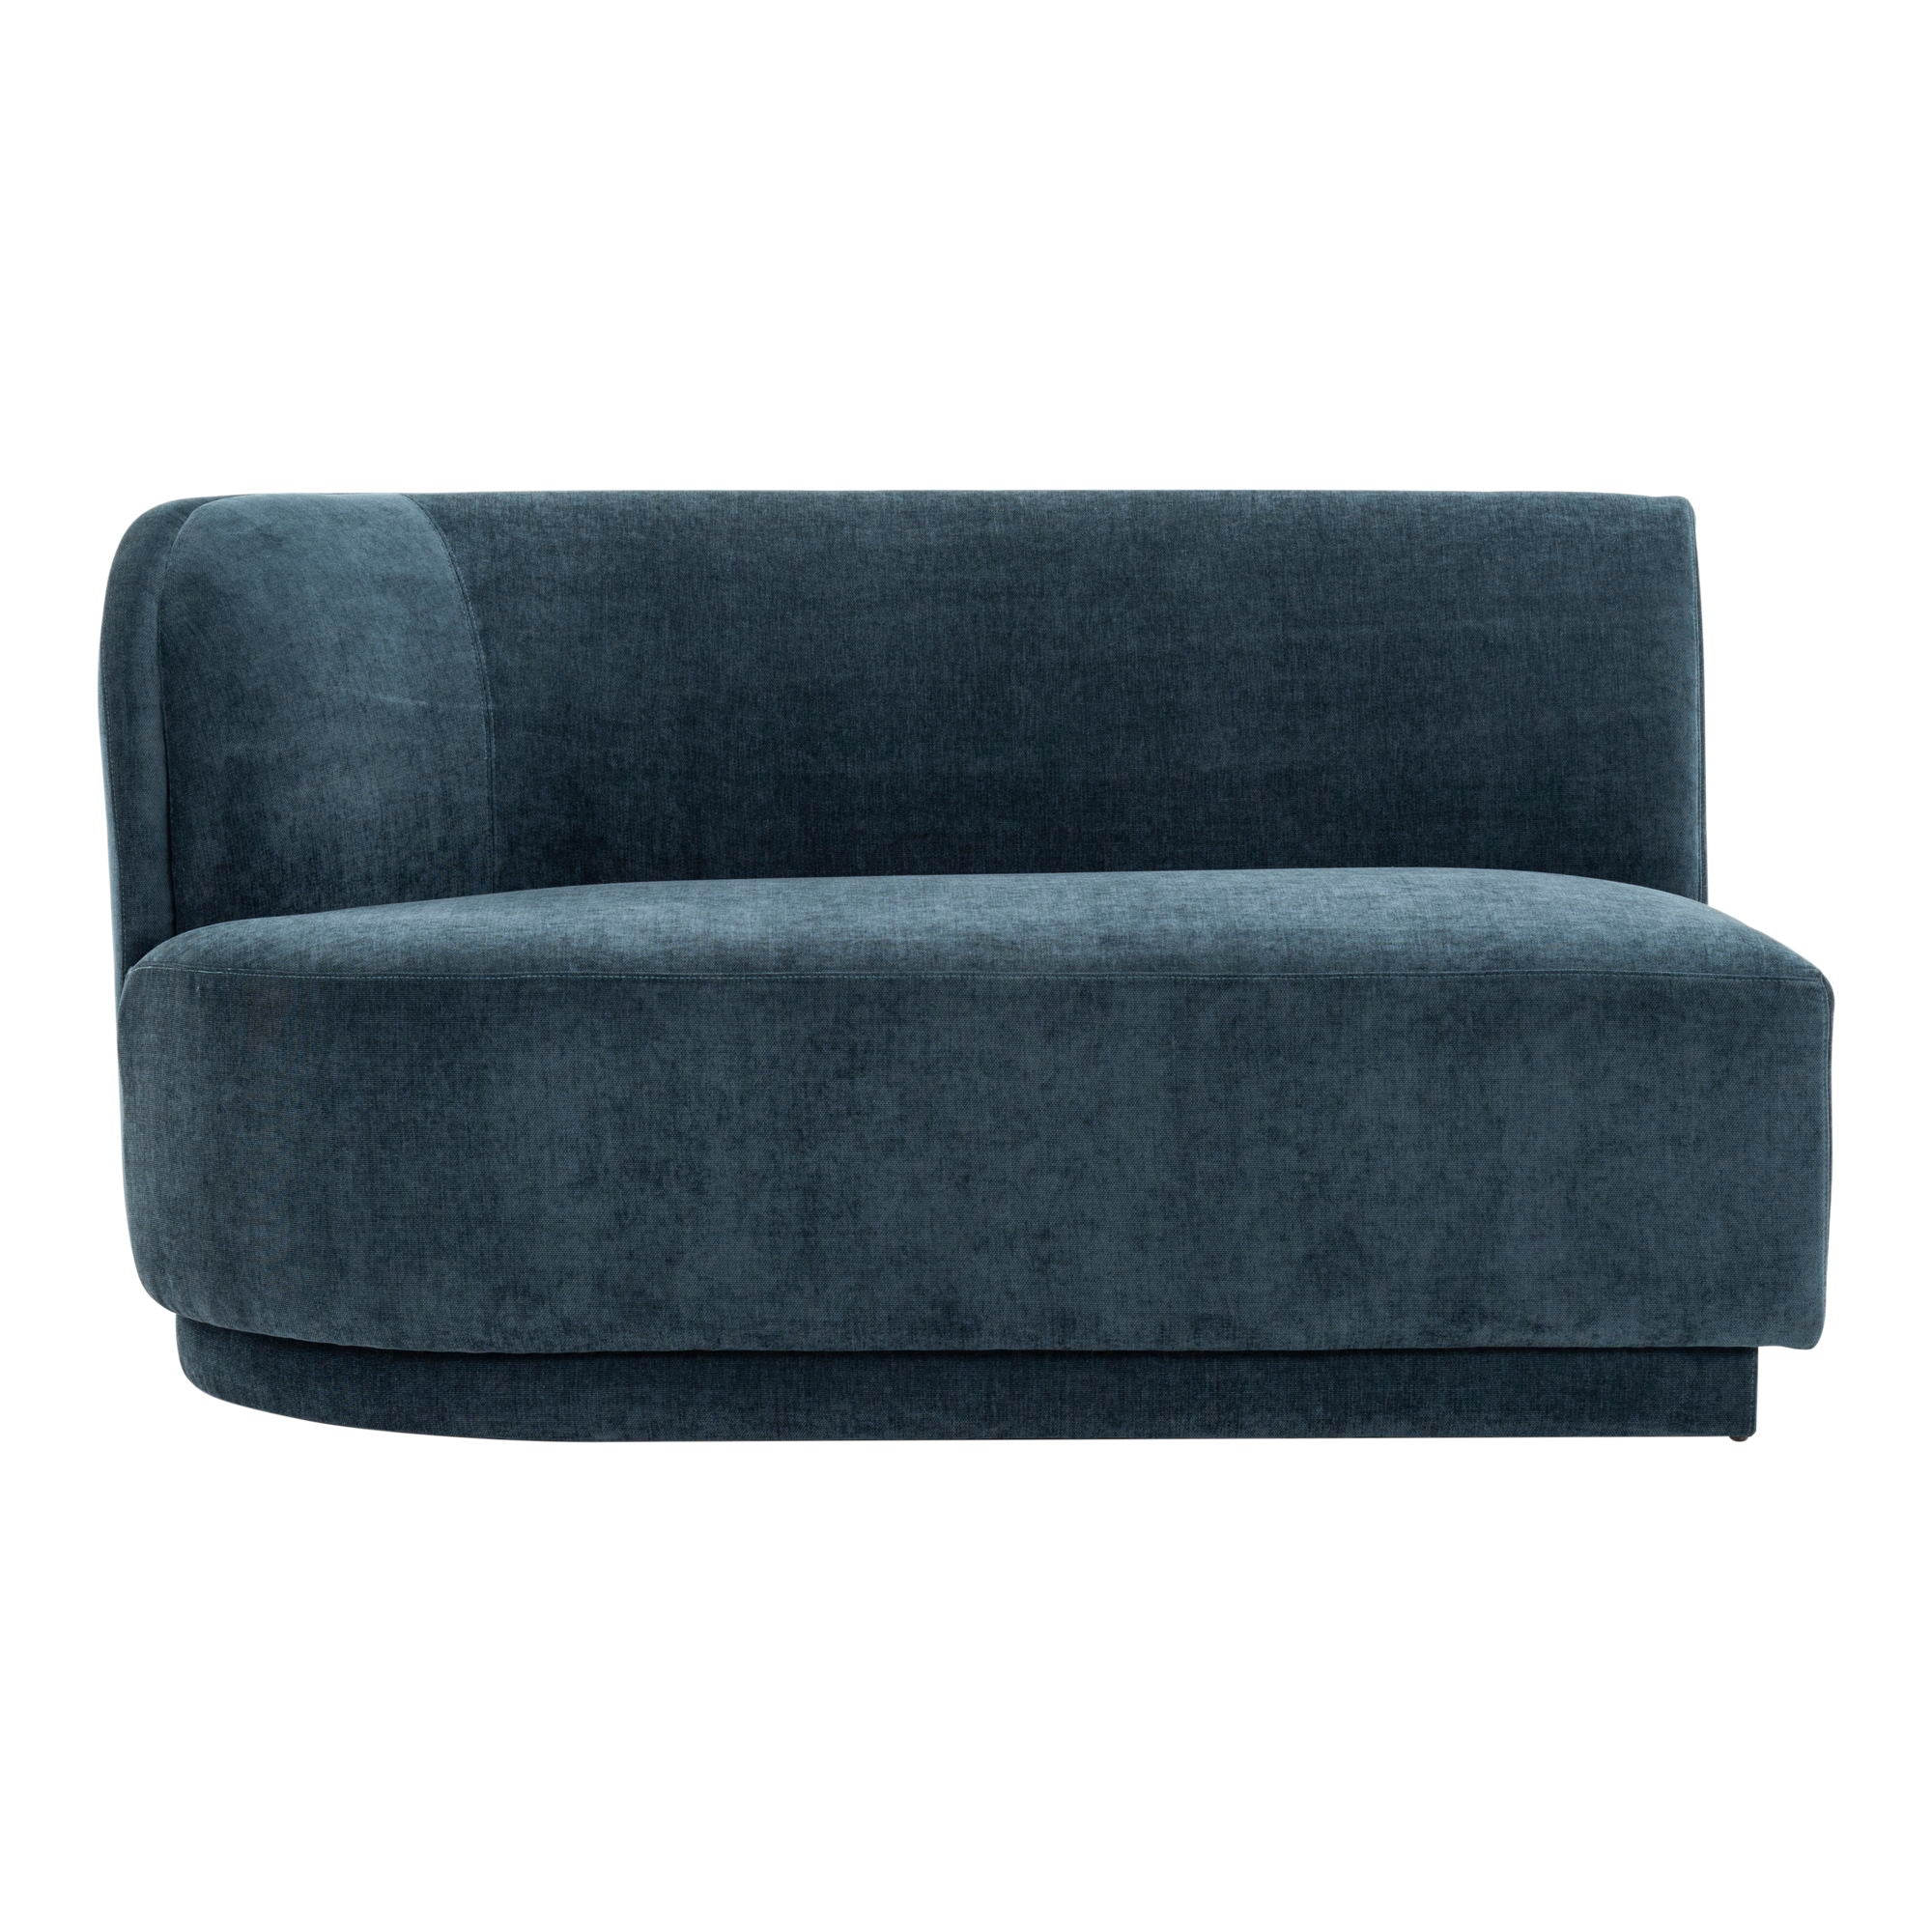 Yoon - 2 Seat Sofa Left - Blue